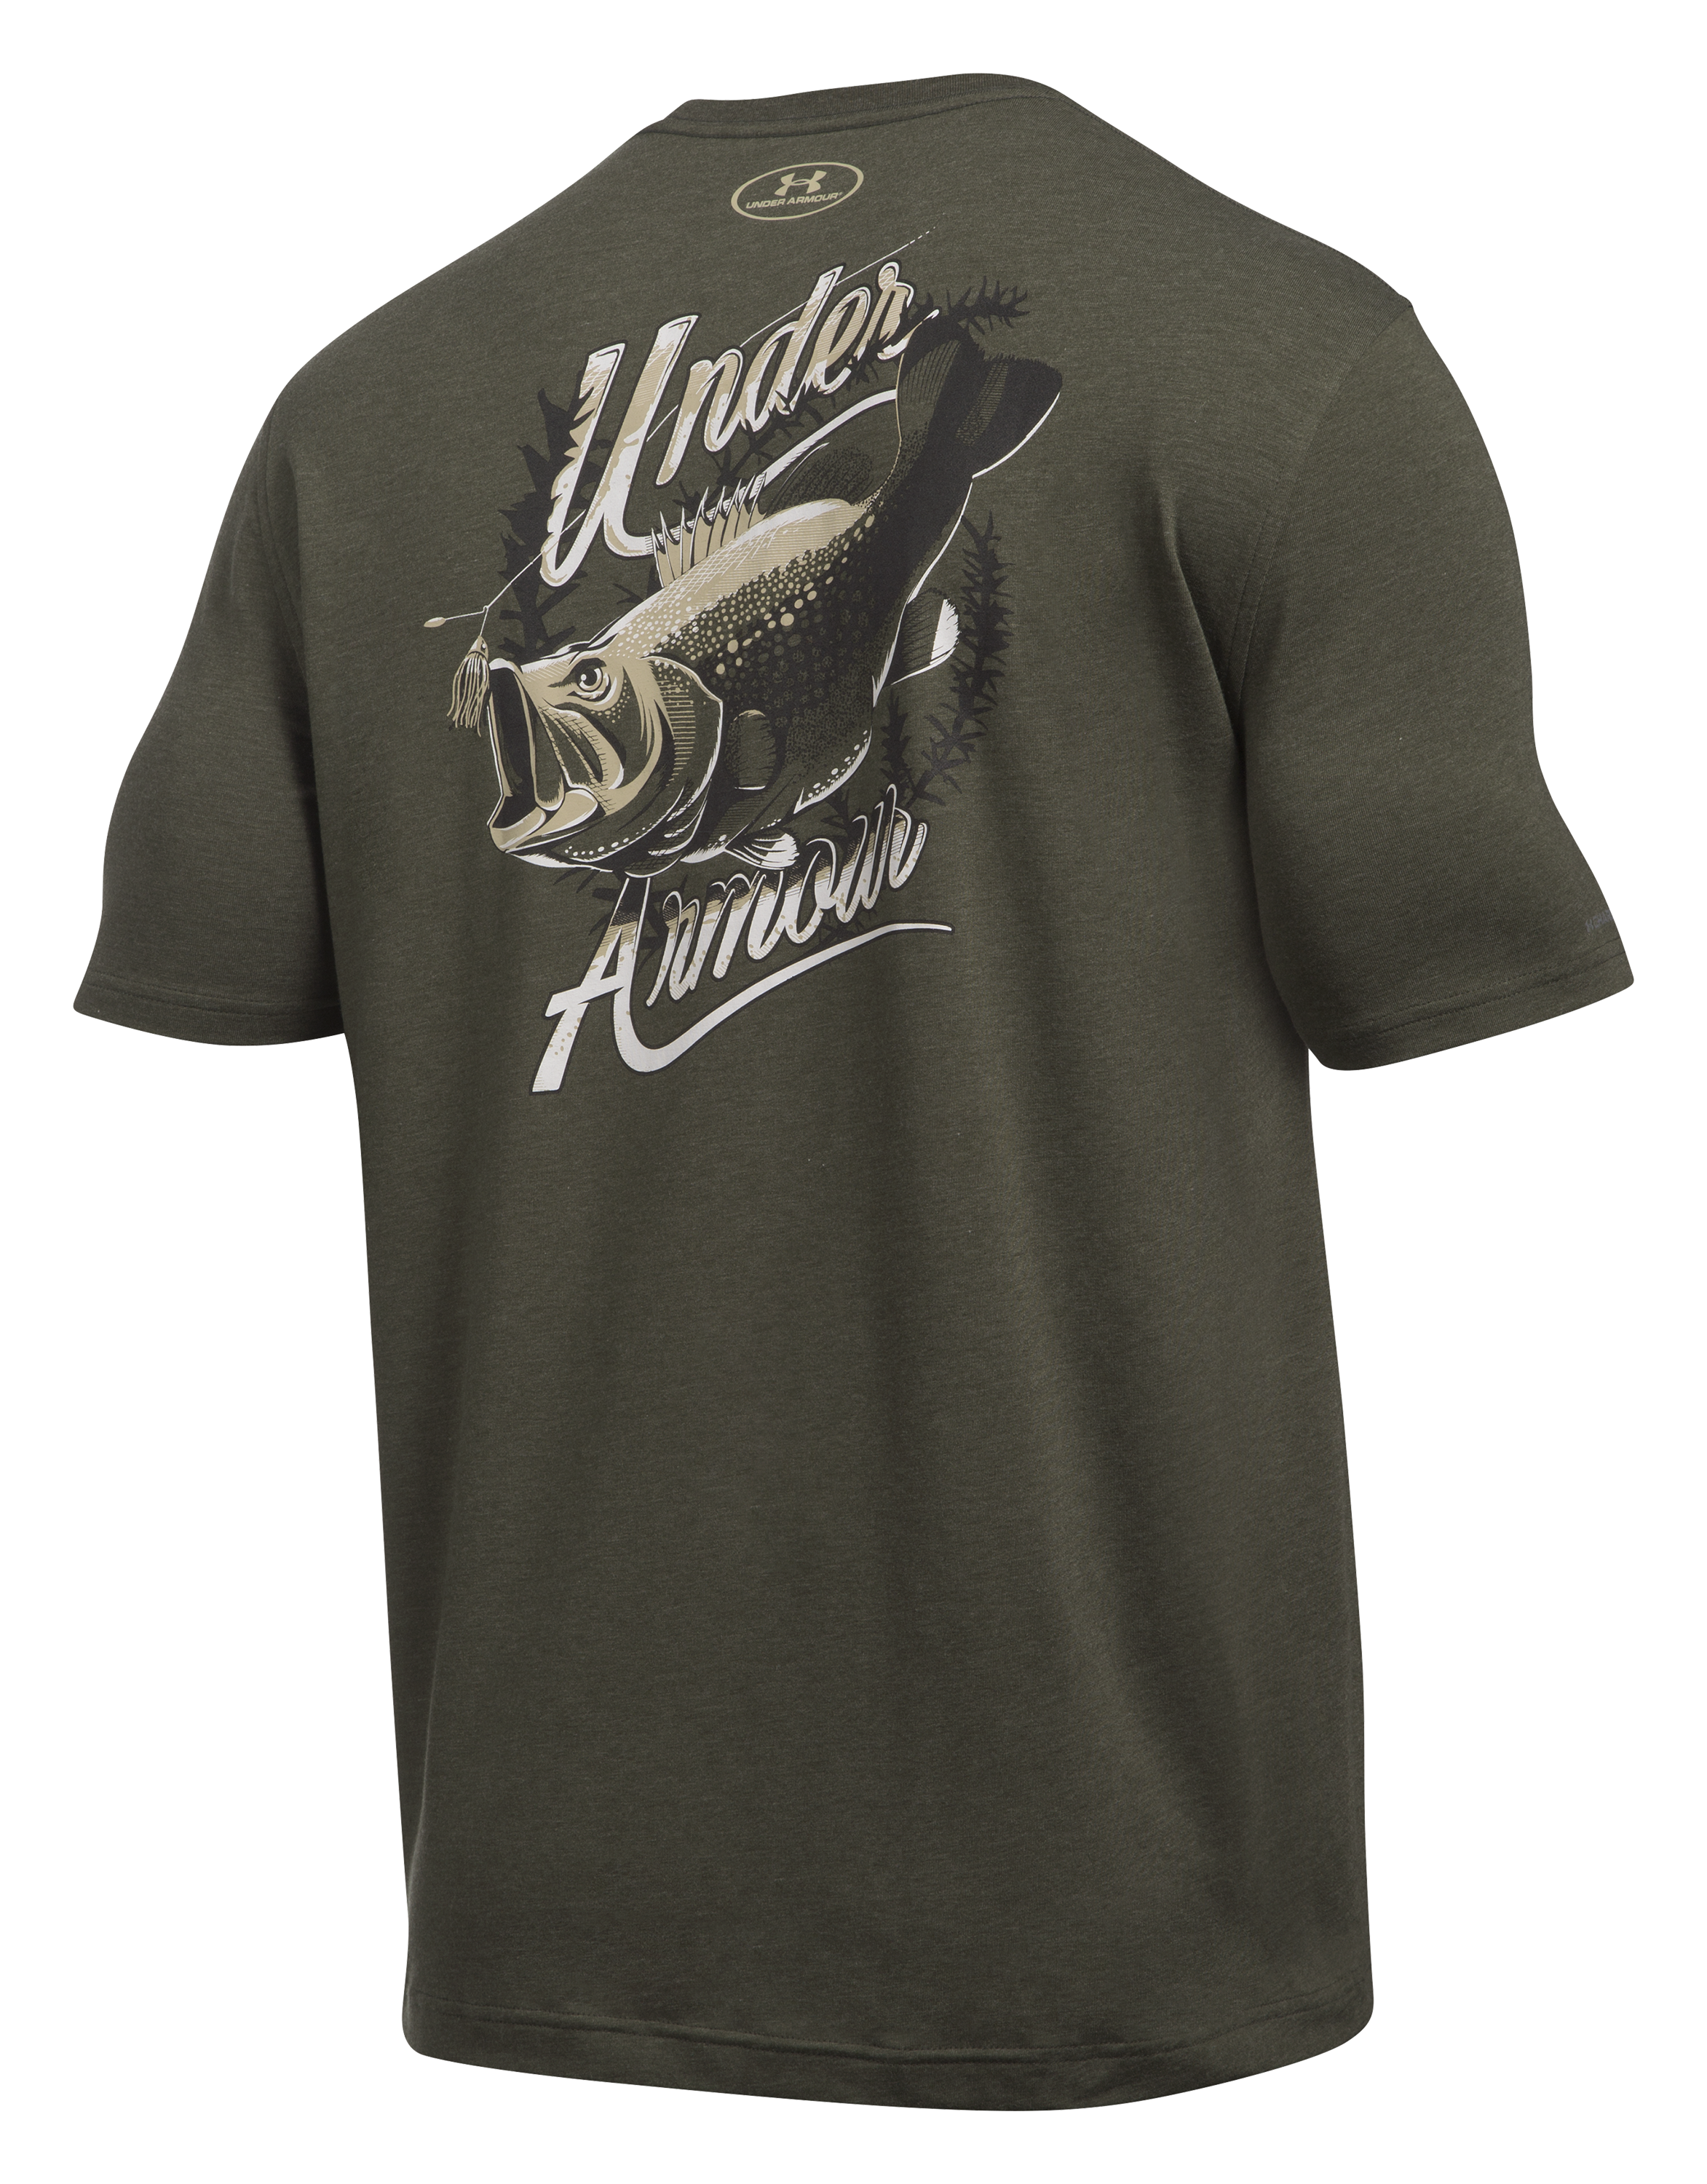 Under Armour Bass Fishing T-Shirt for Men